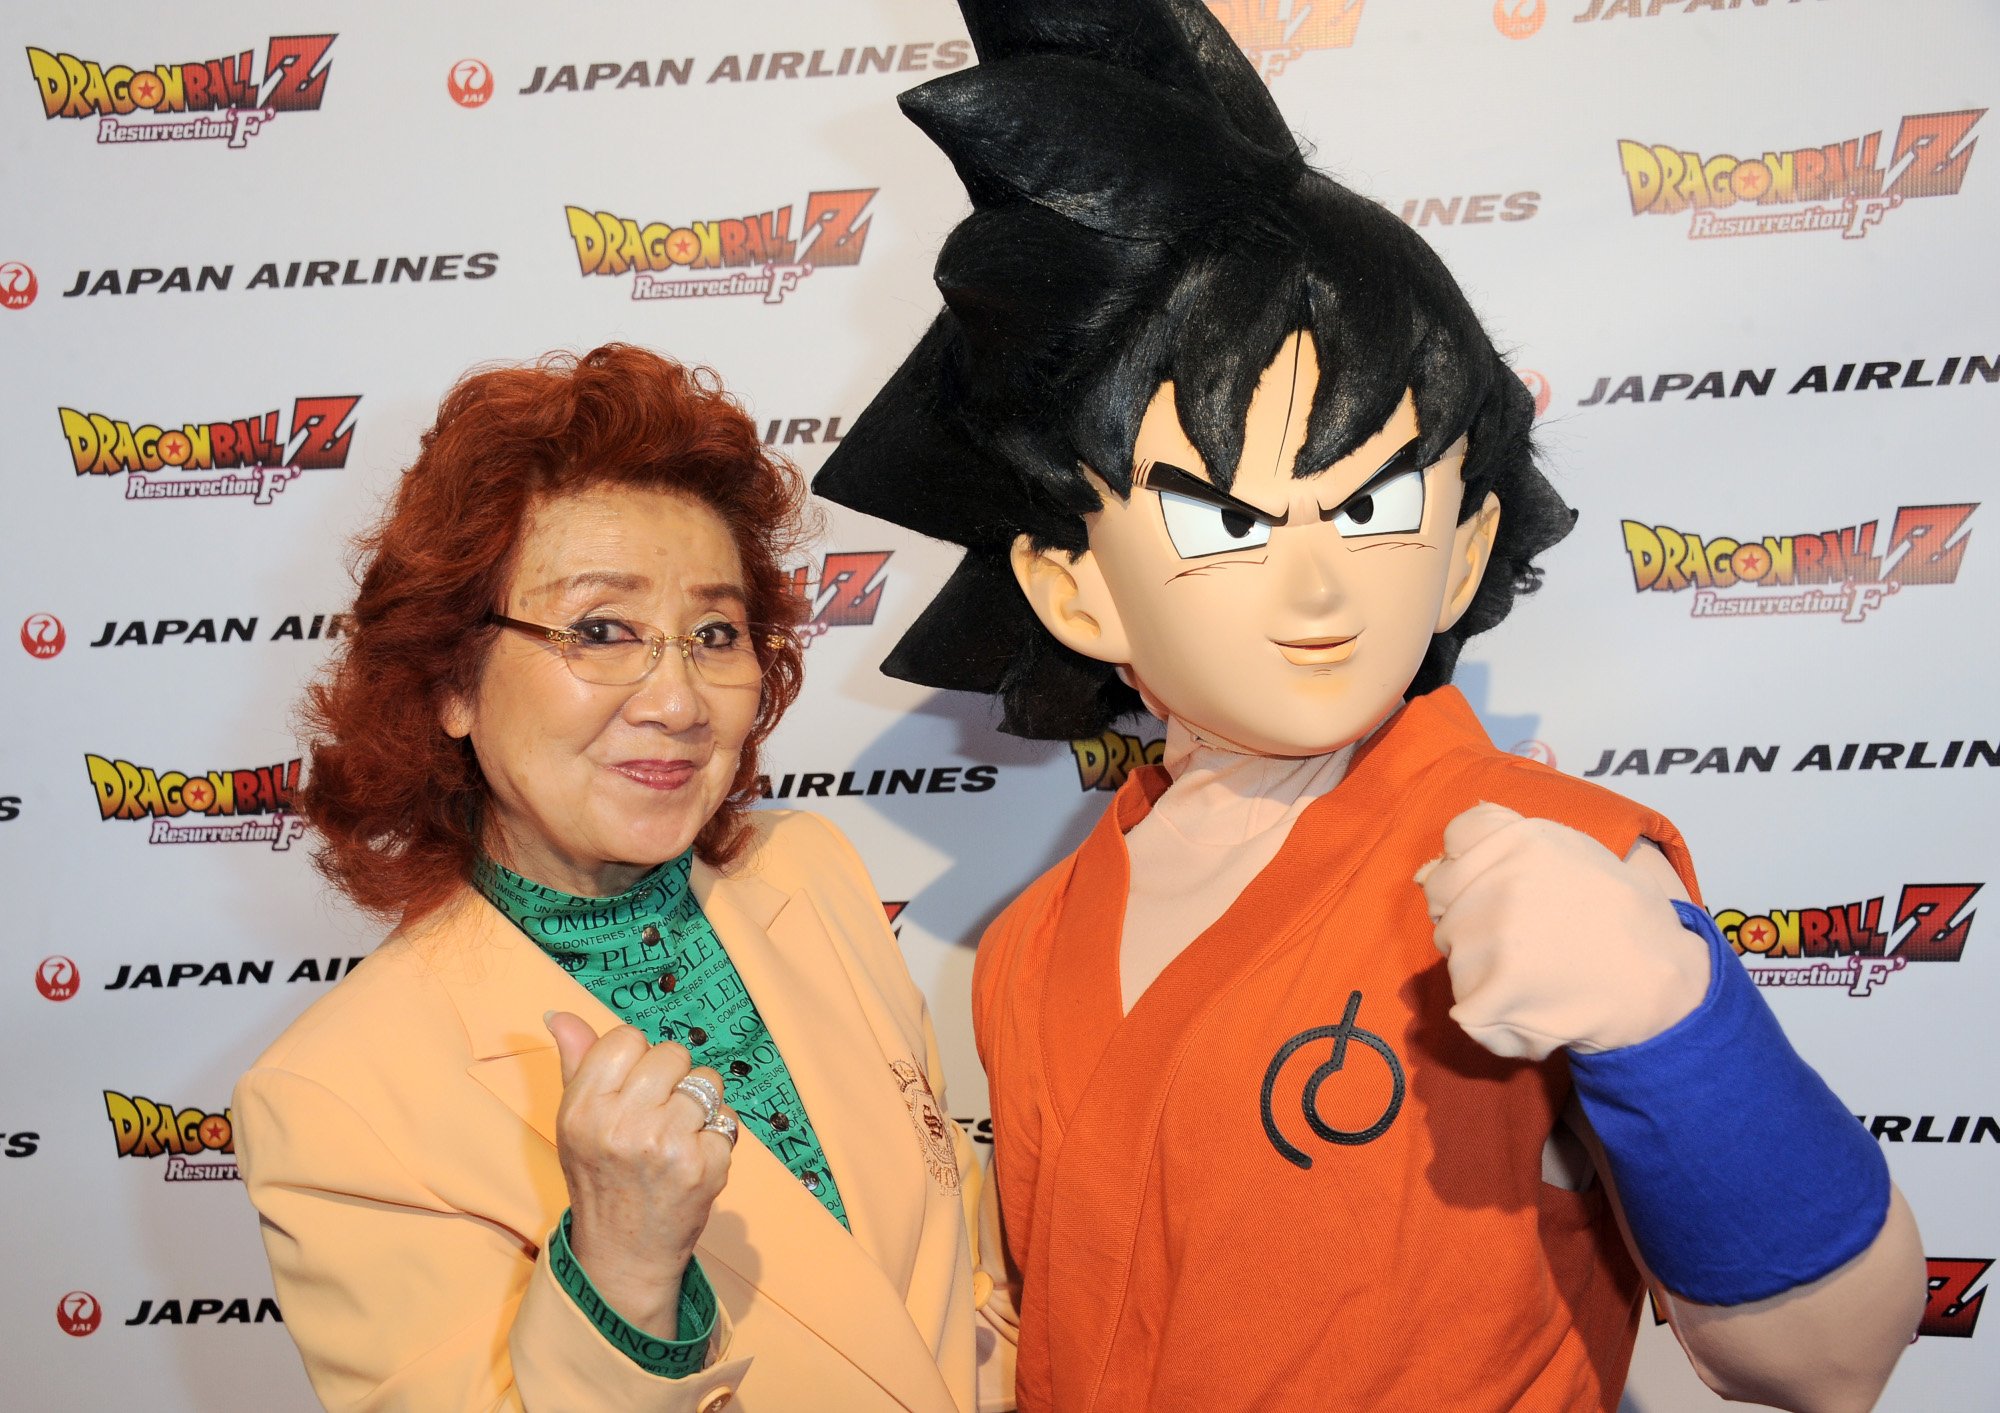 Gohan voice actor Masako Nozawa and someone dressed as Goku.